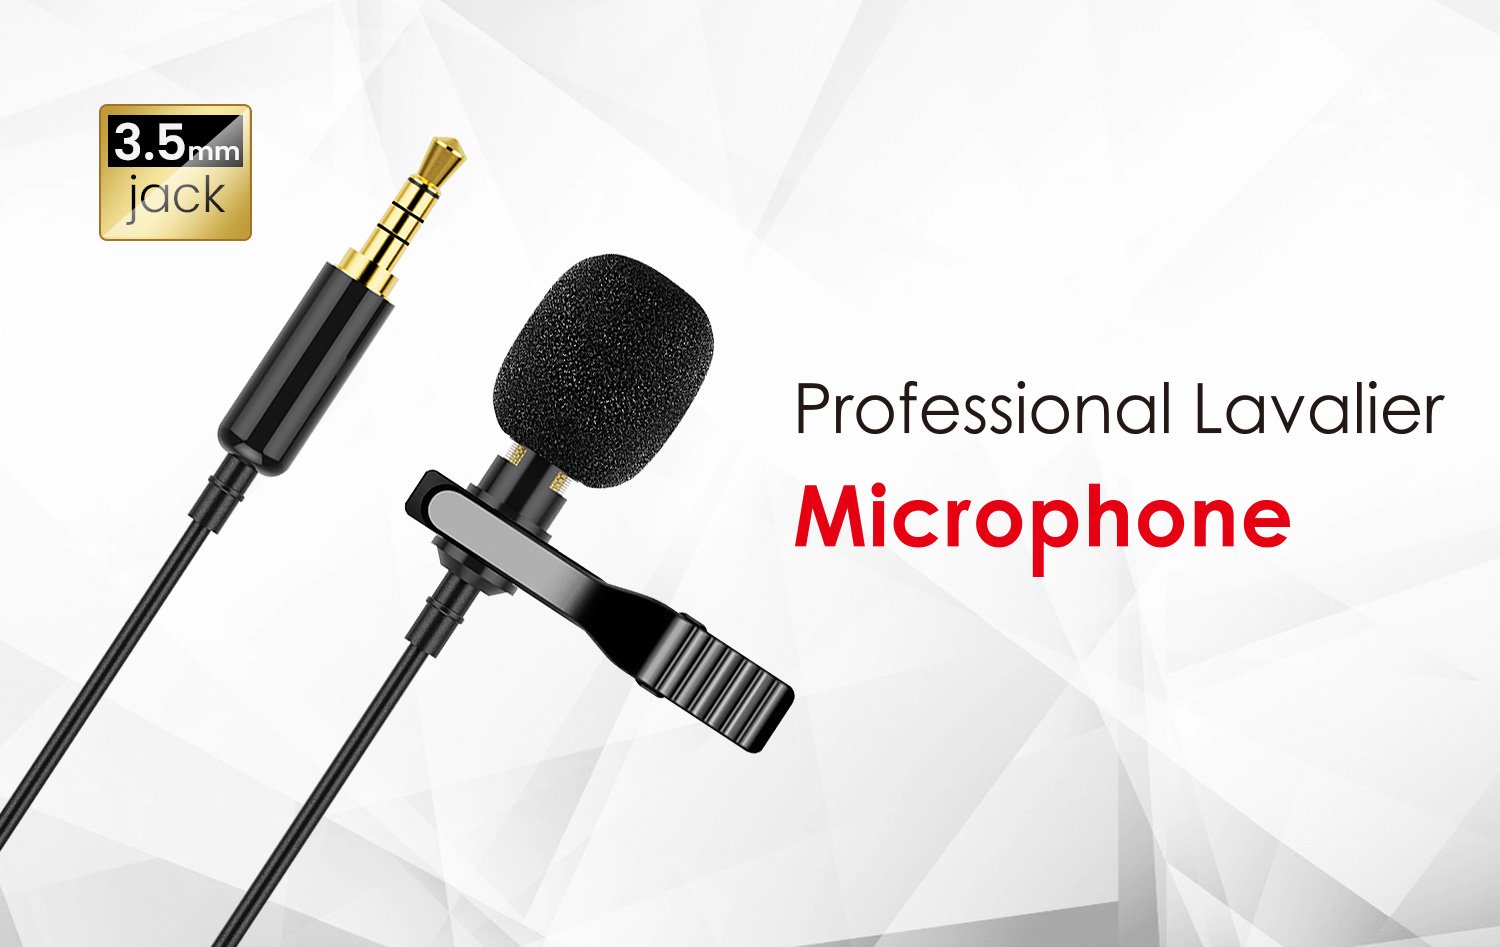 VIOFO mikrofon for A139